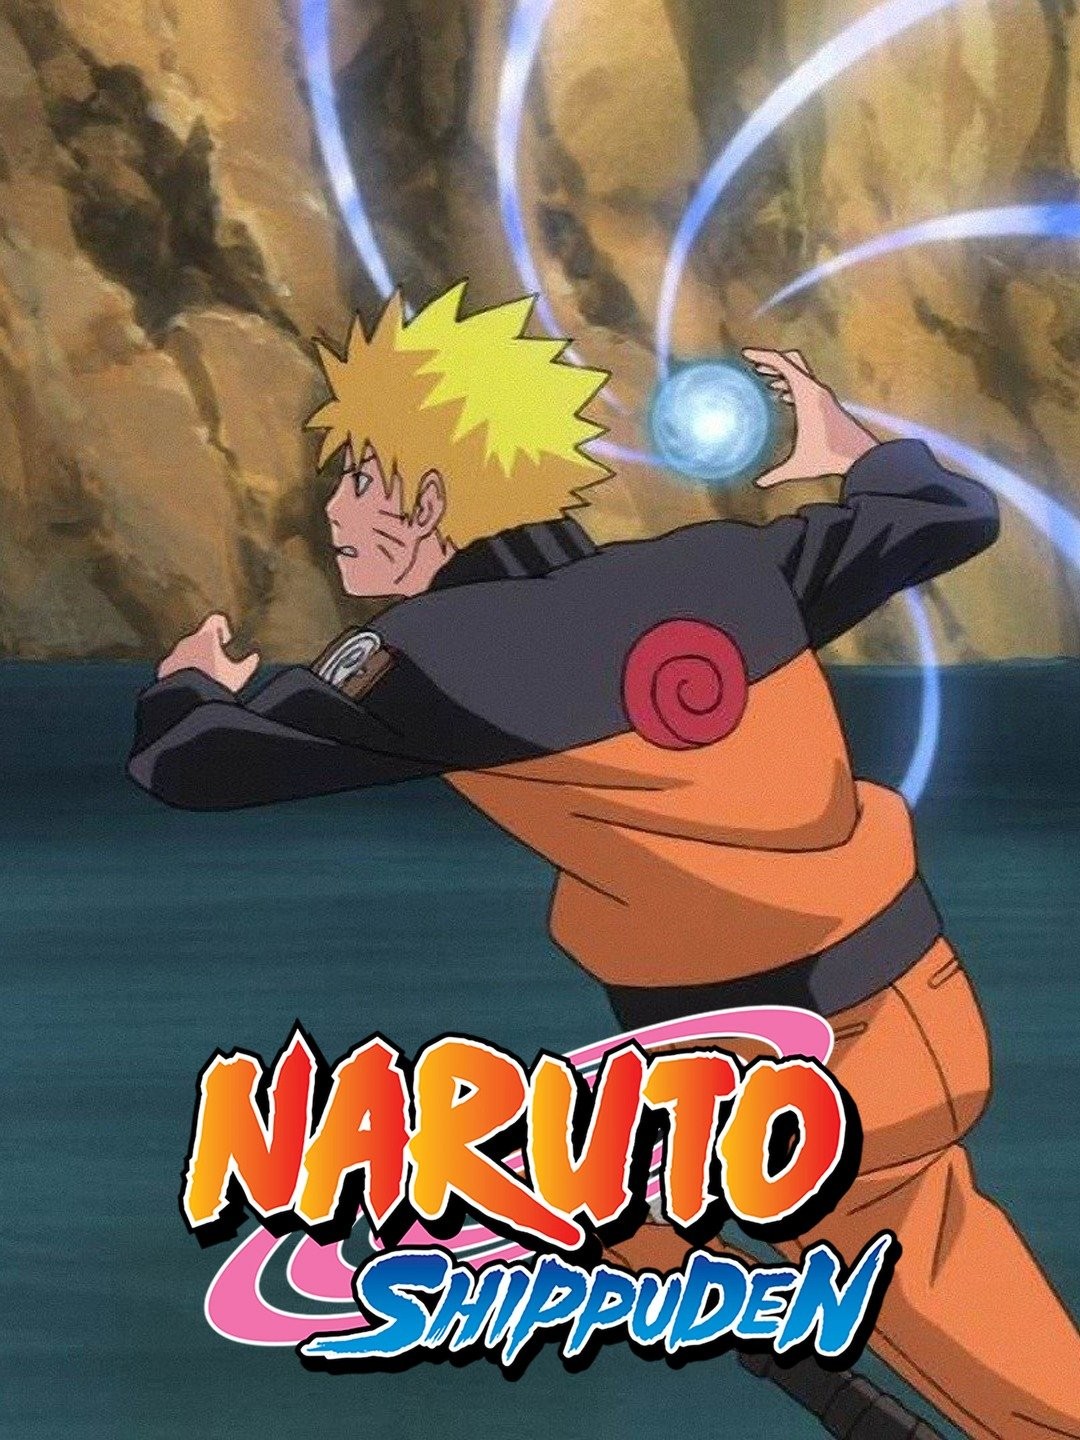 Naruto Episode List, Naruto: Shippuden Episode List